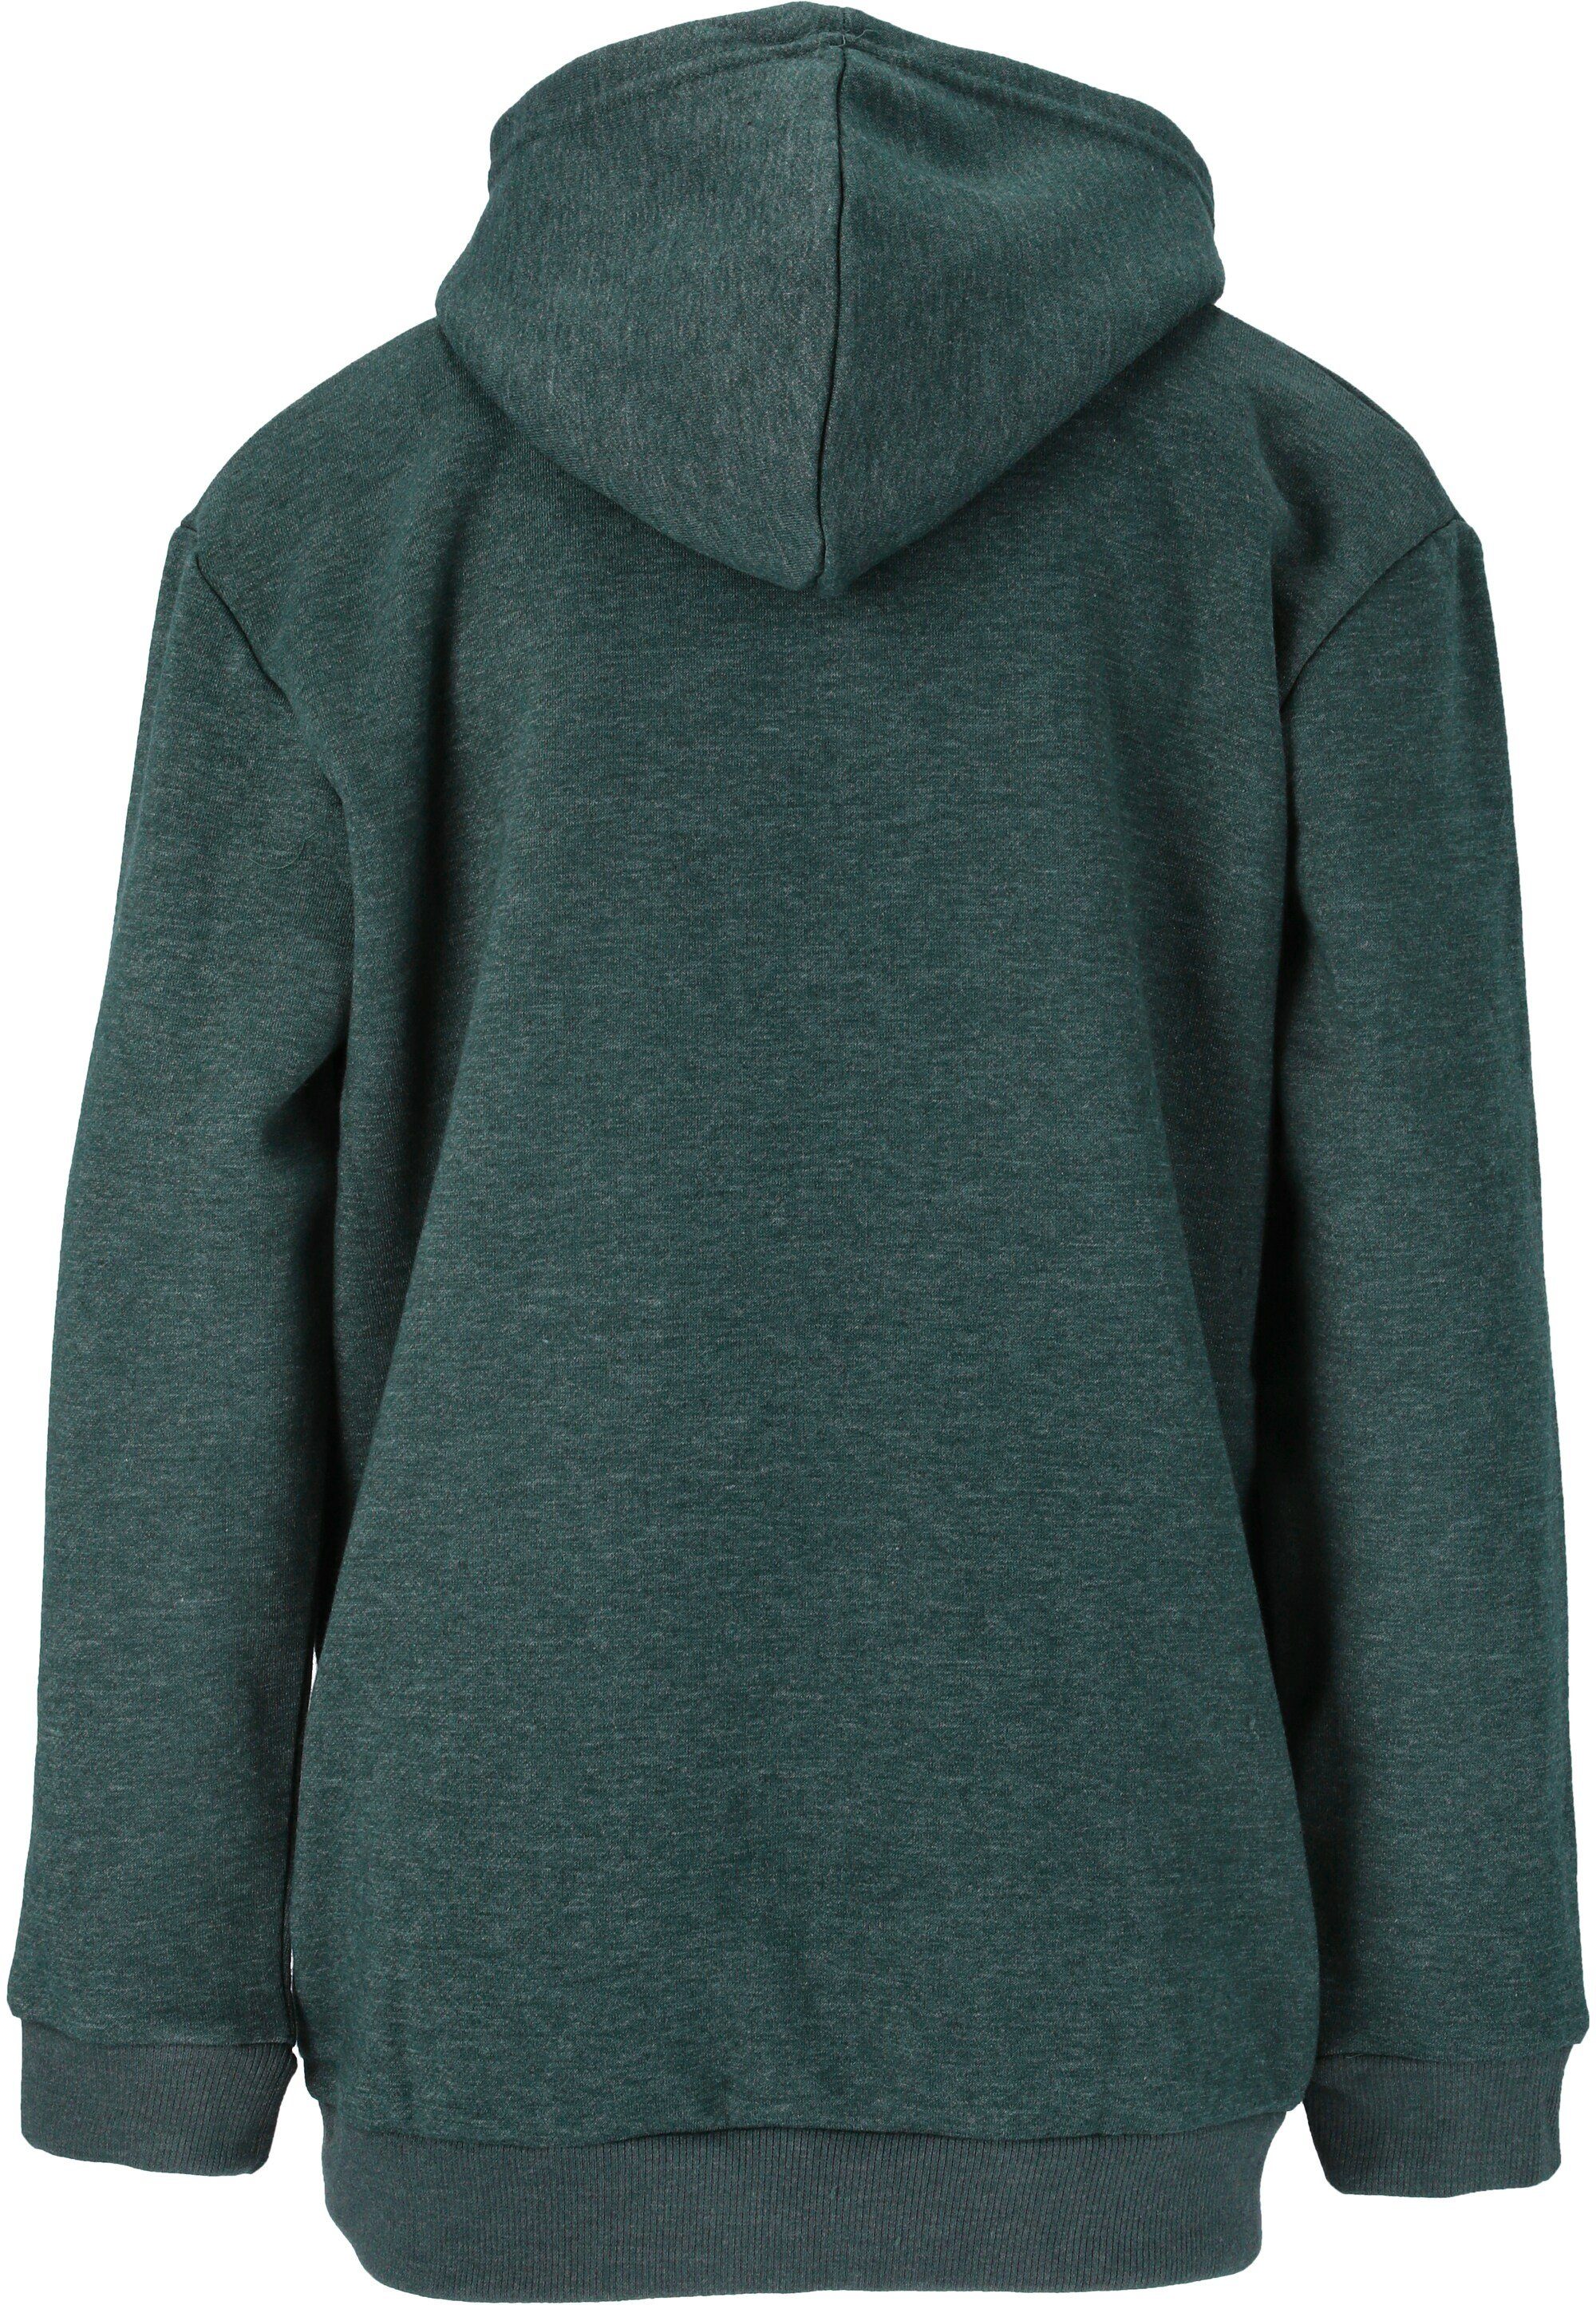 Sweeny CRUZ trendigem Sweatshirt mit Frontprint dunkelgrün